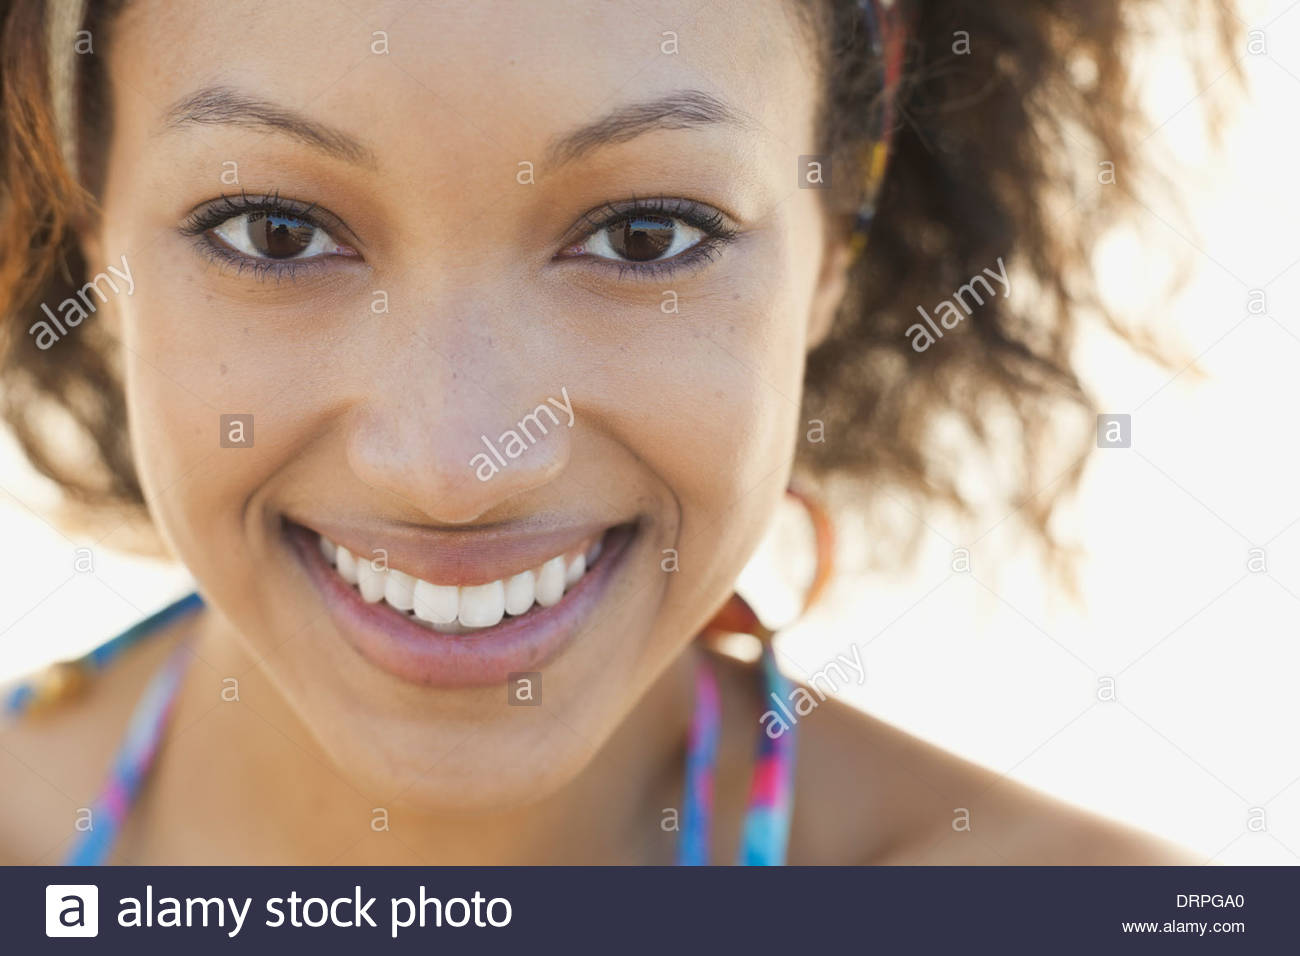 Close-up portrait of beautiful woman smiling Stock Photo